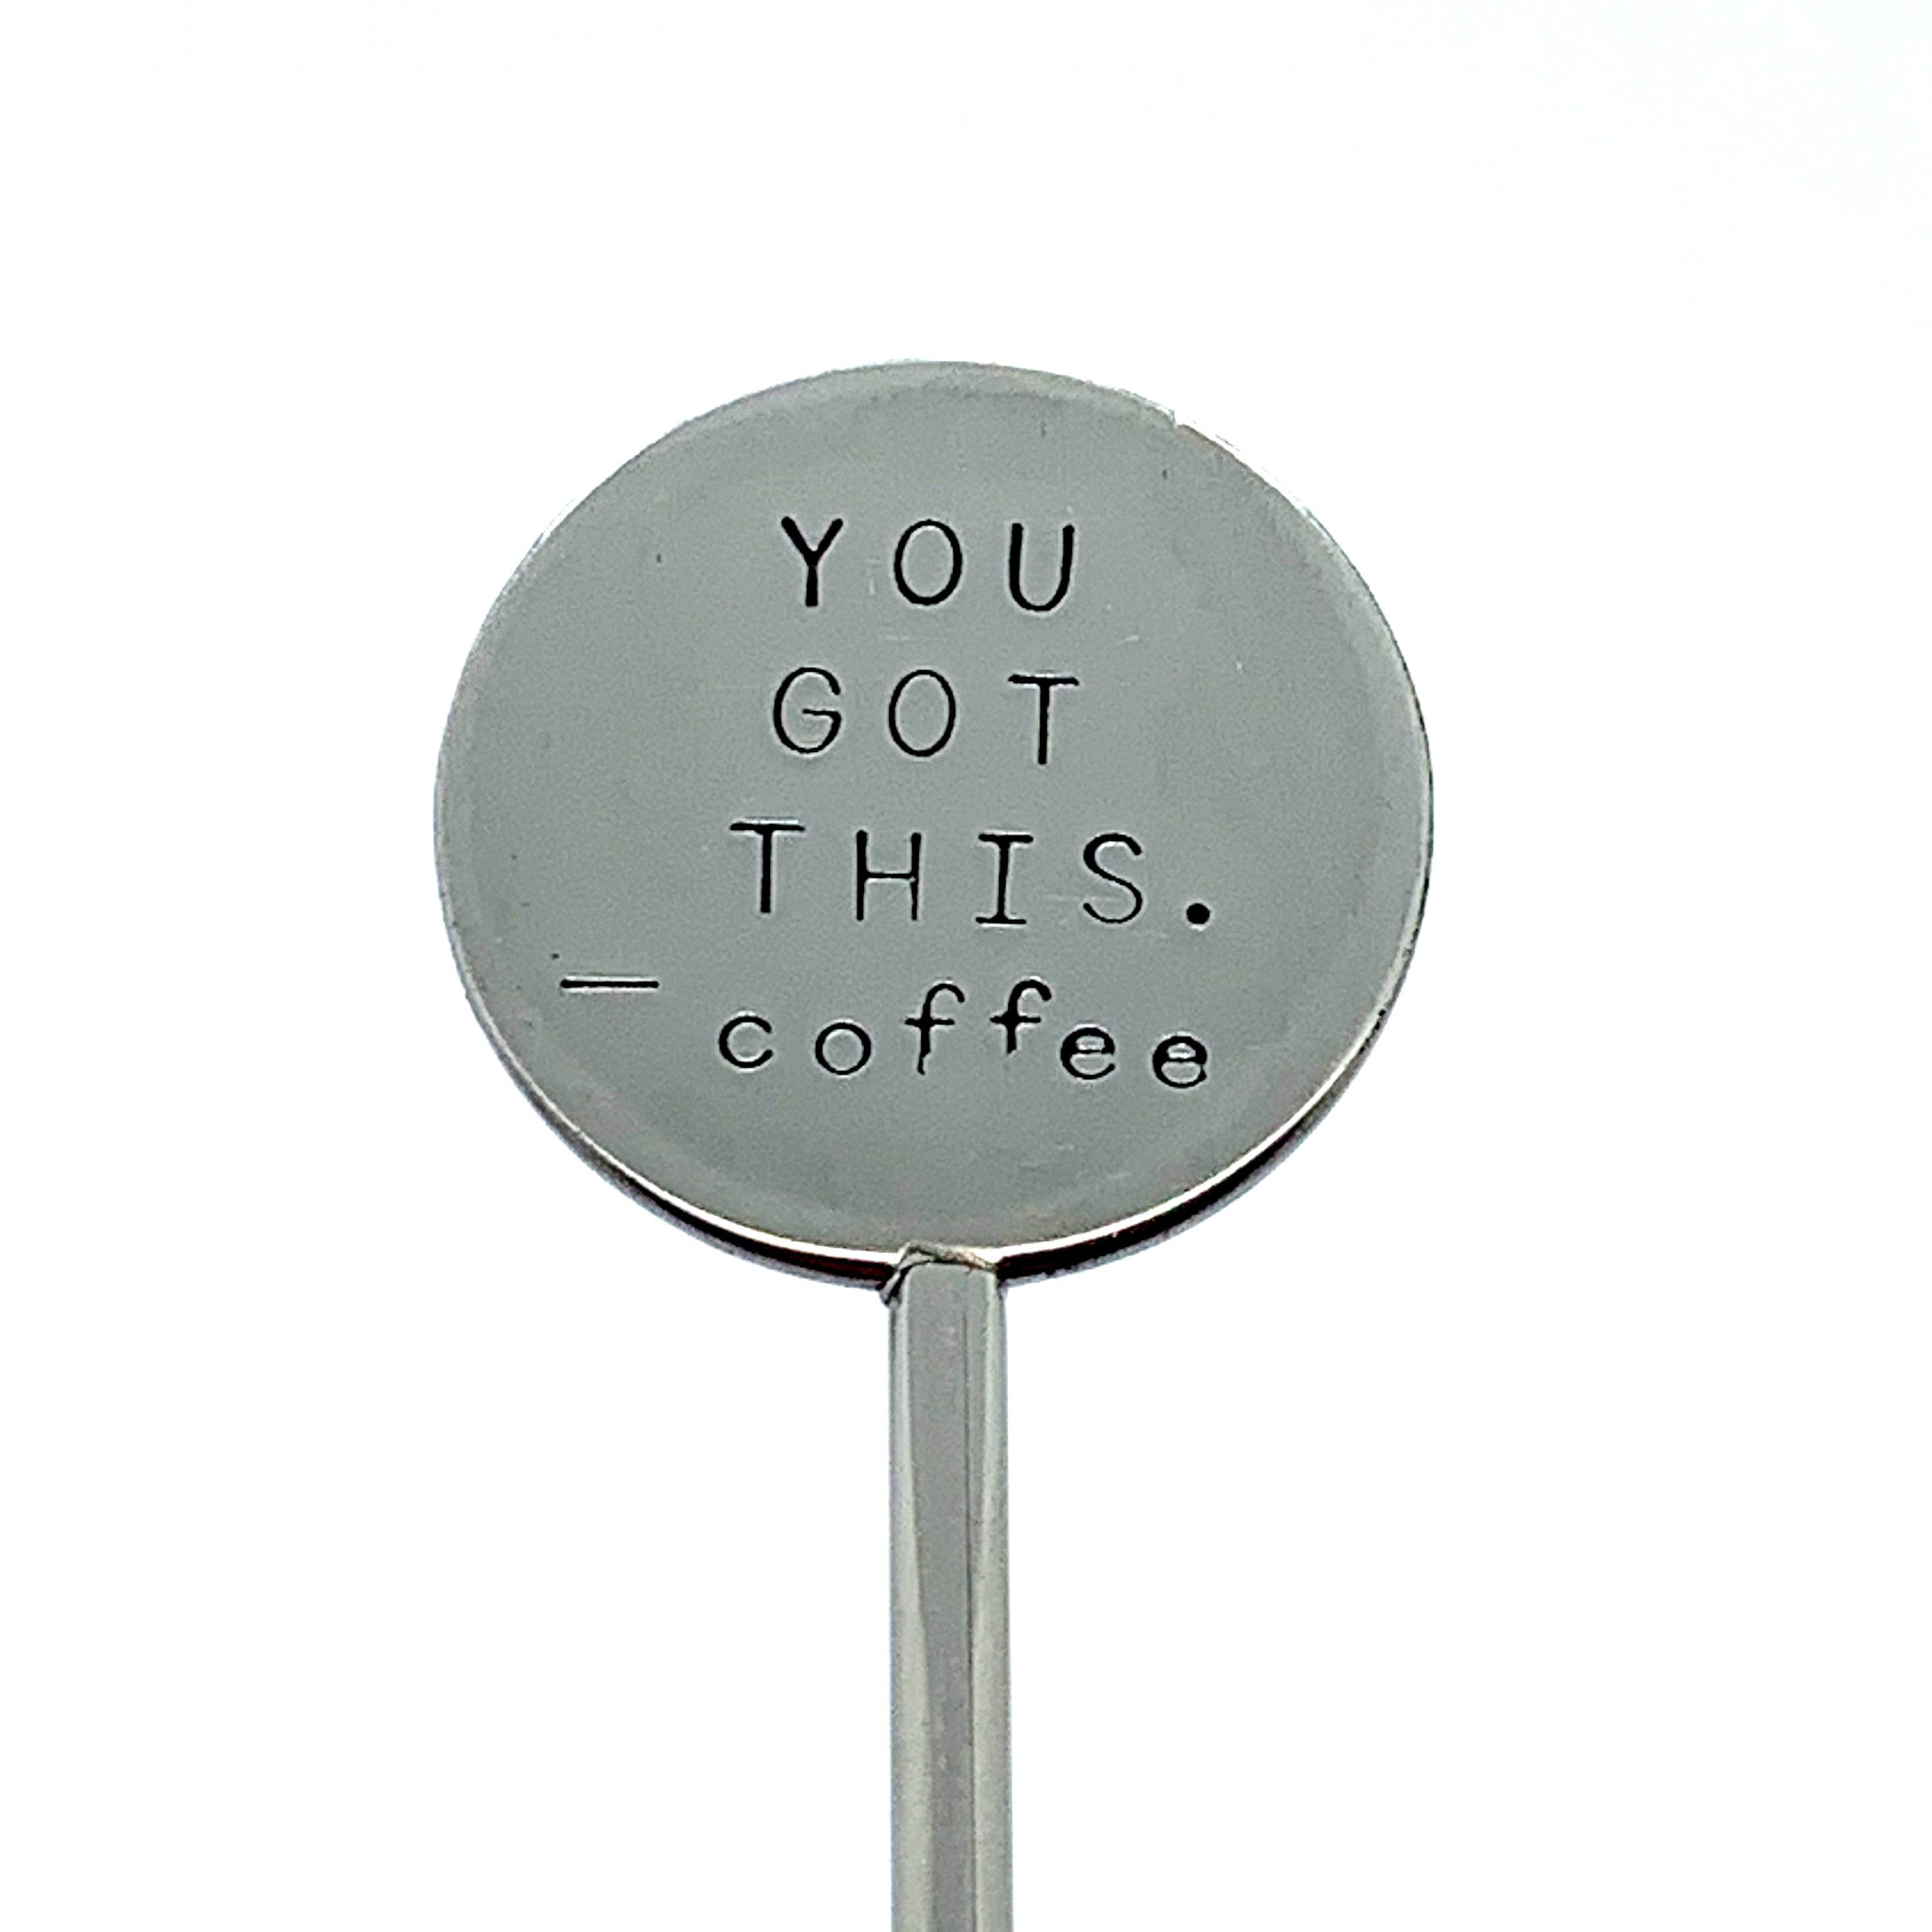 Coffee Stirrer - You Got This. -coffee